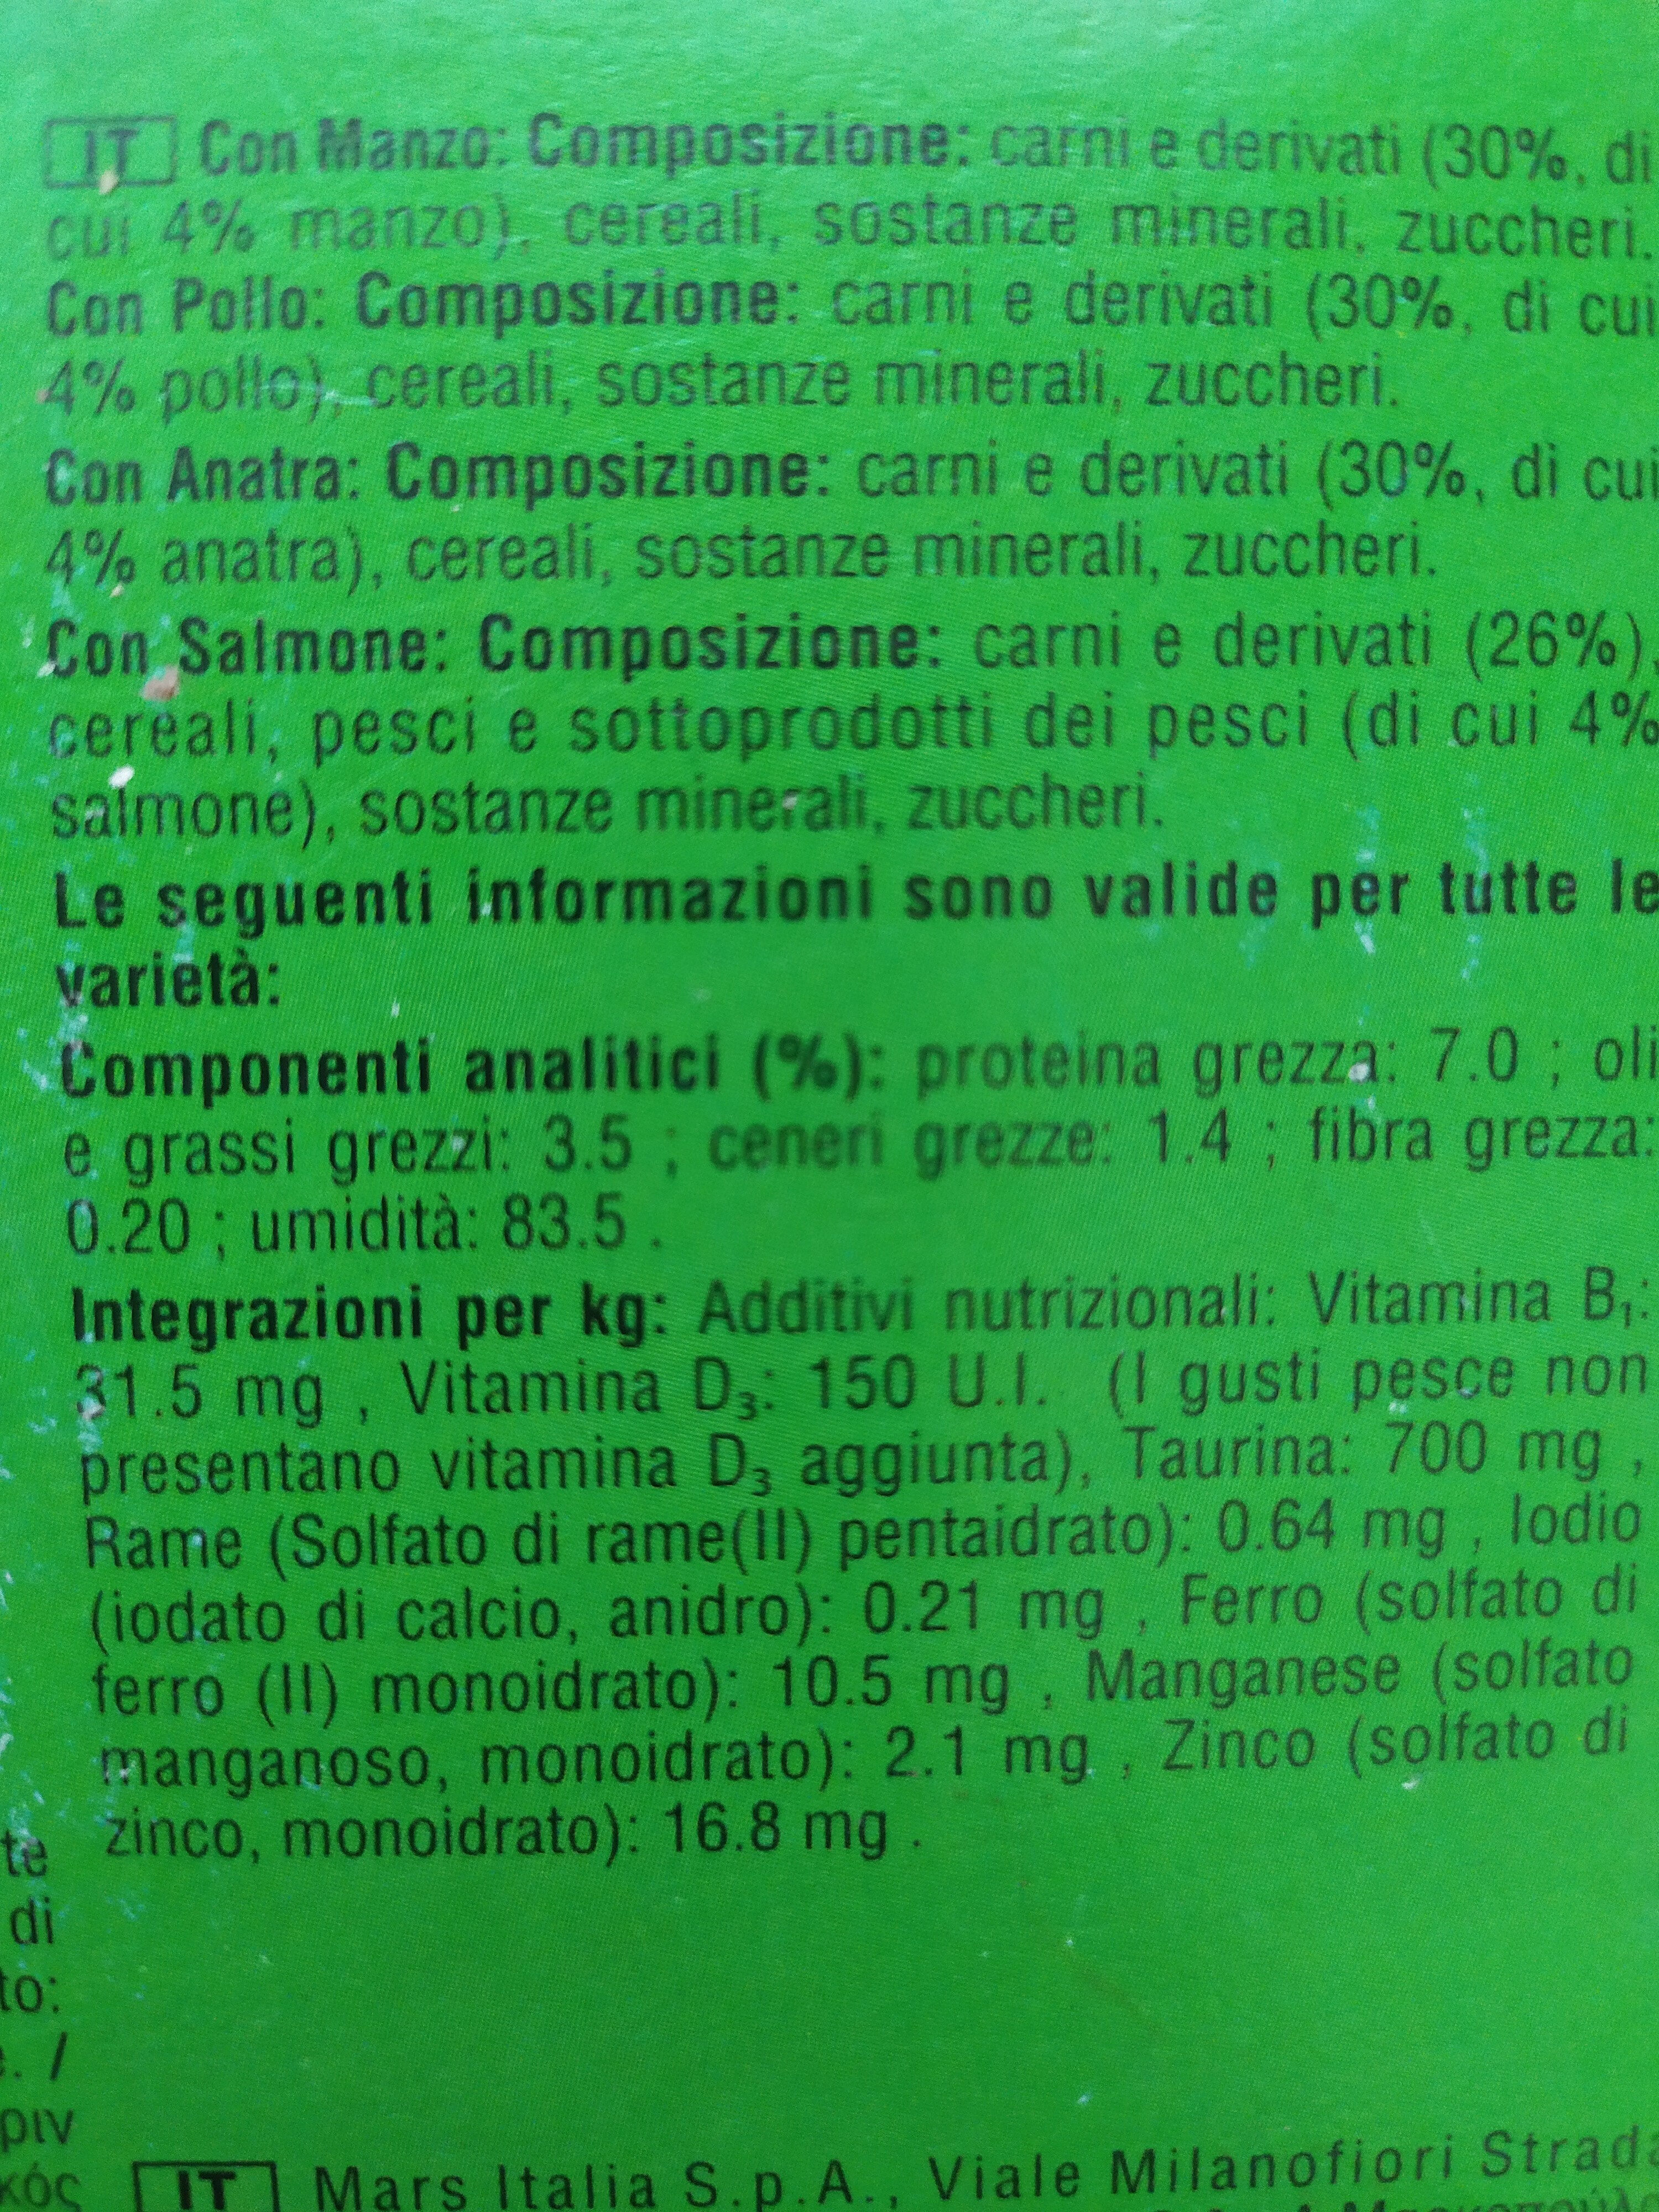 kitekat la Simpatica Canaglia - Ingredients - it